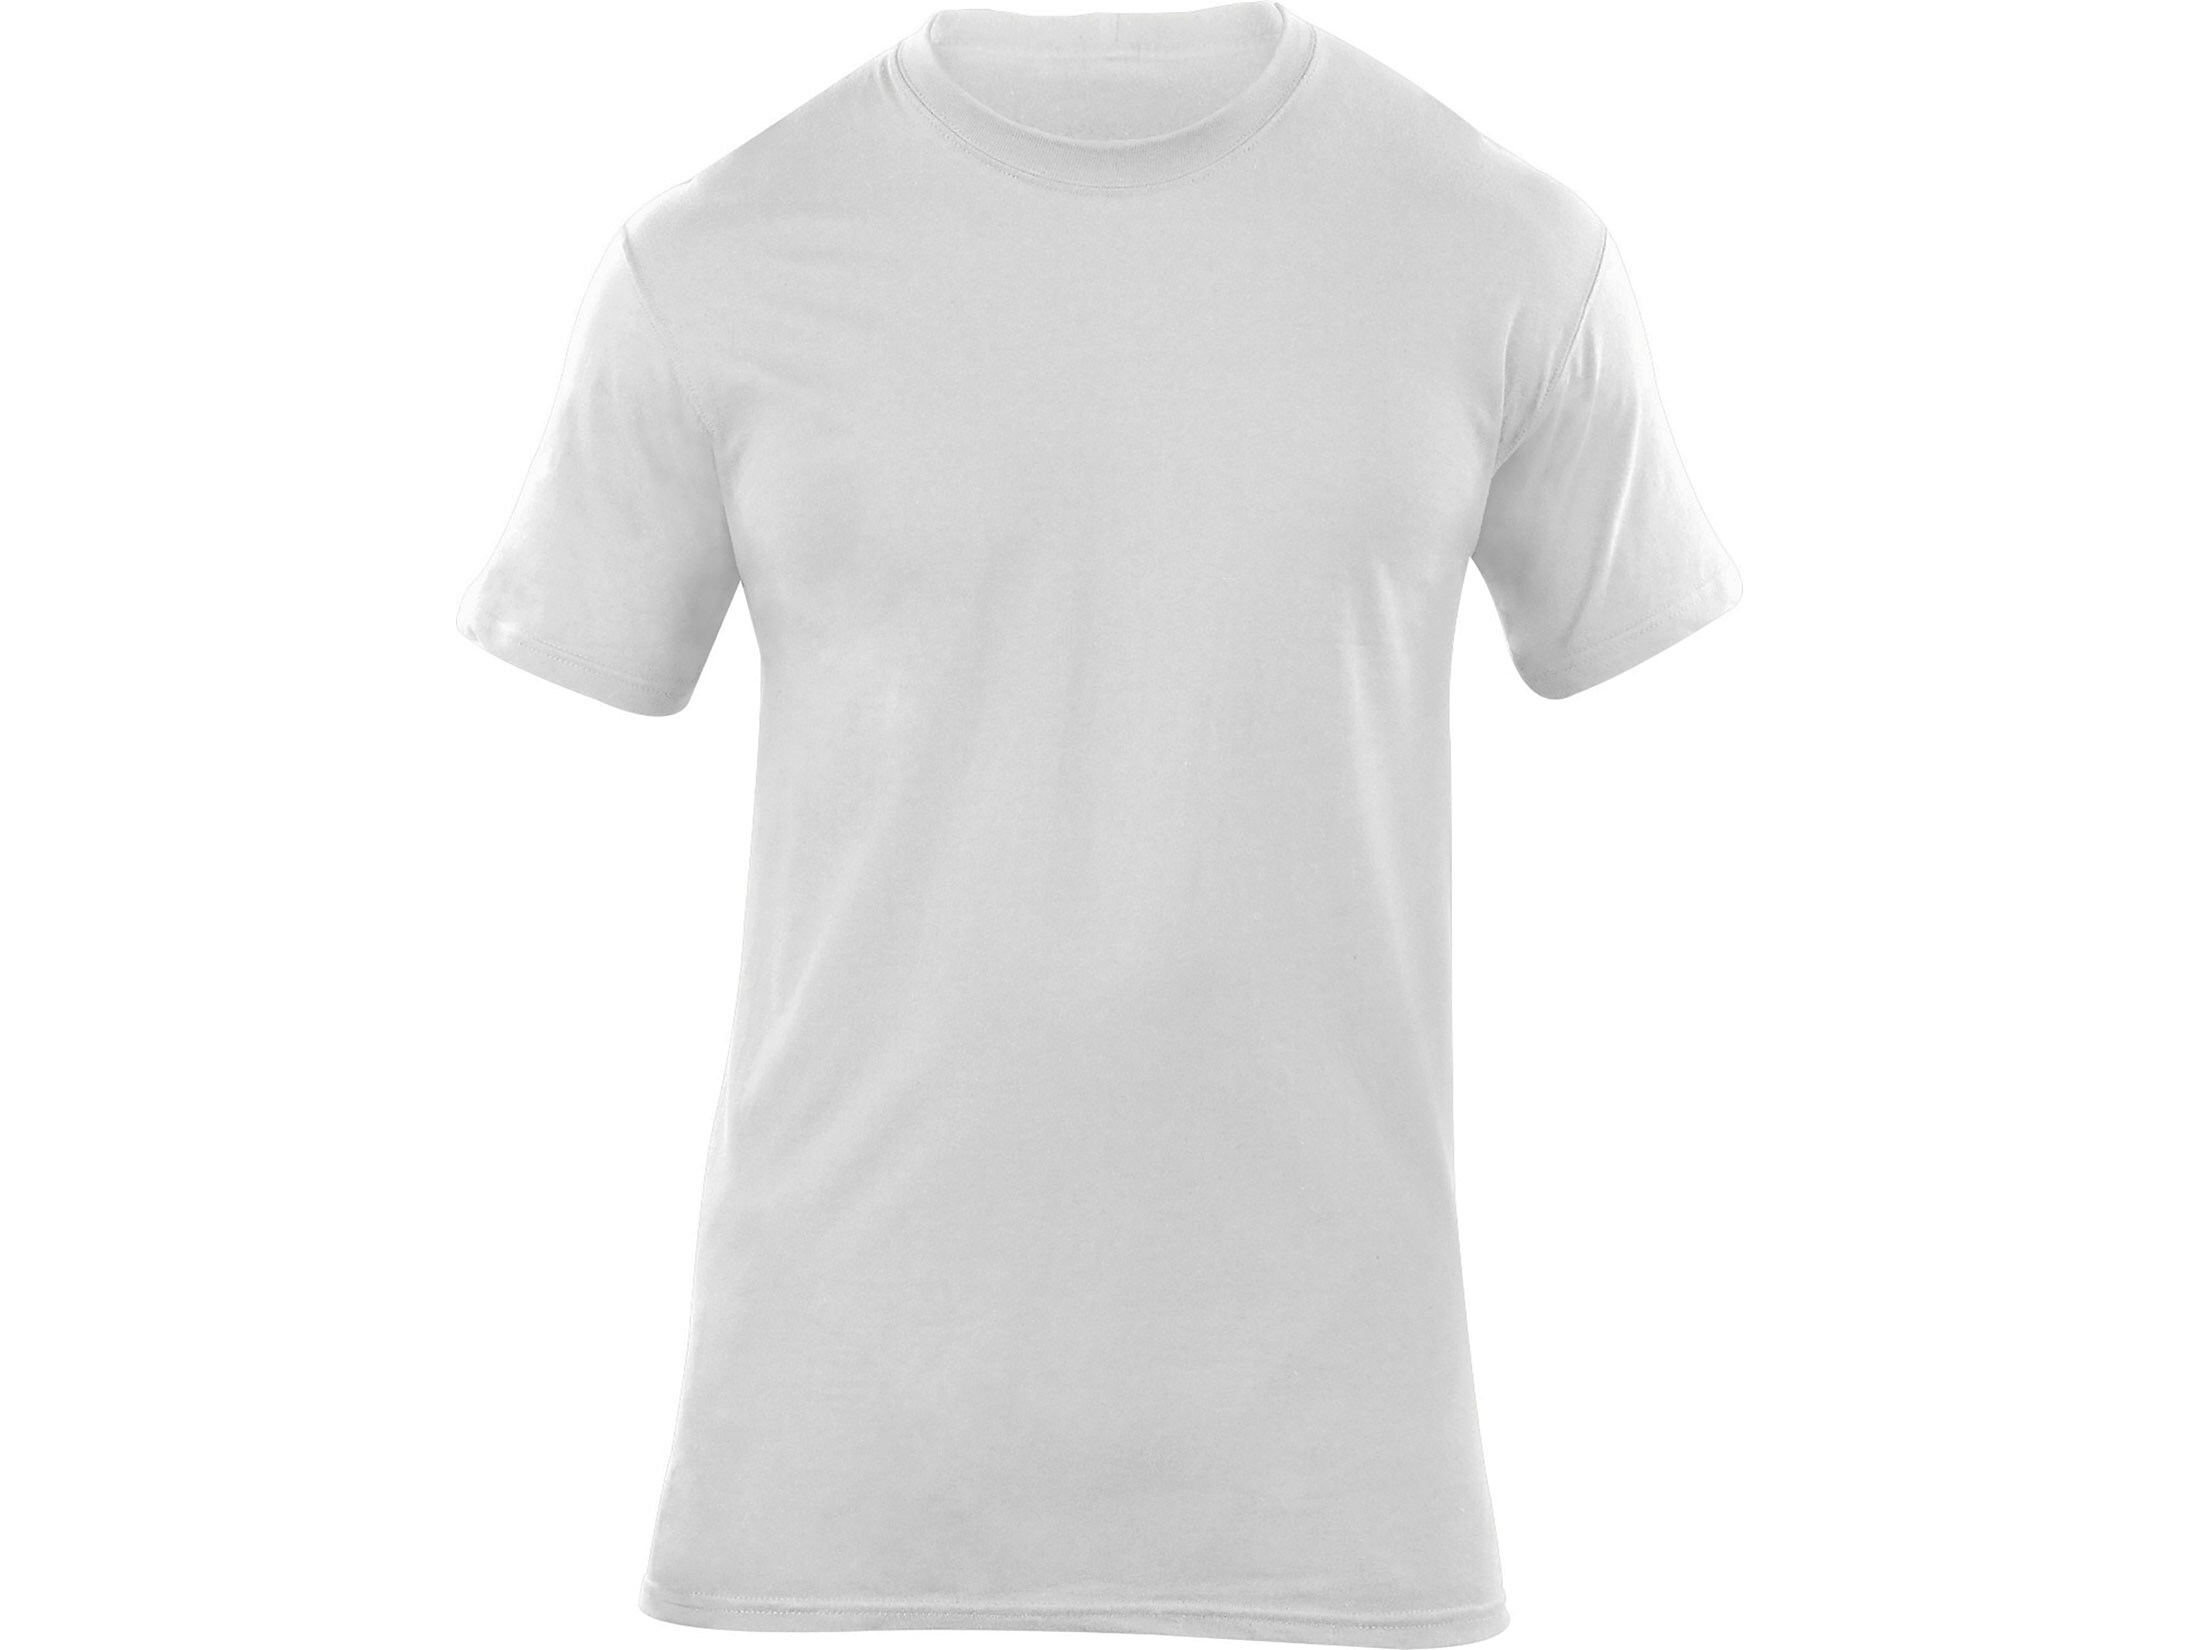 5.11 Men's Utili-T Crew Shirt Short Sleeve Cotton ACU Tan 2XL 3PK